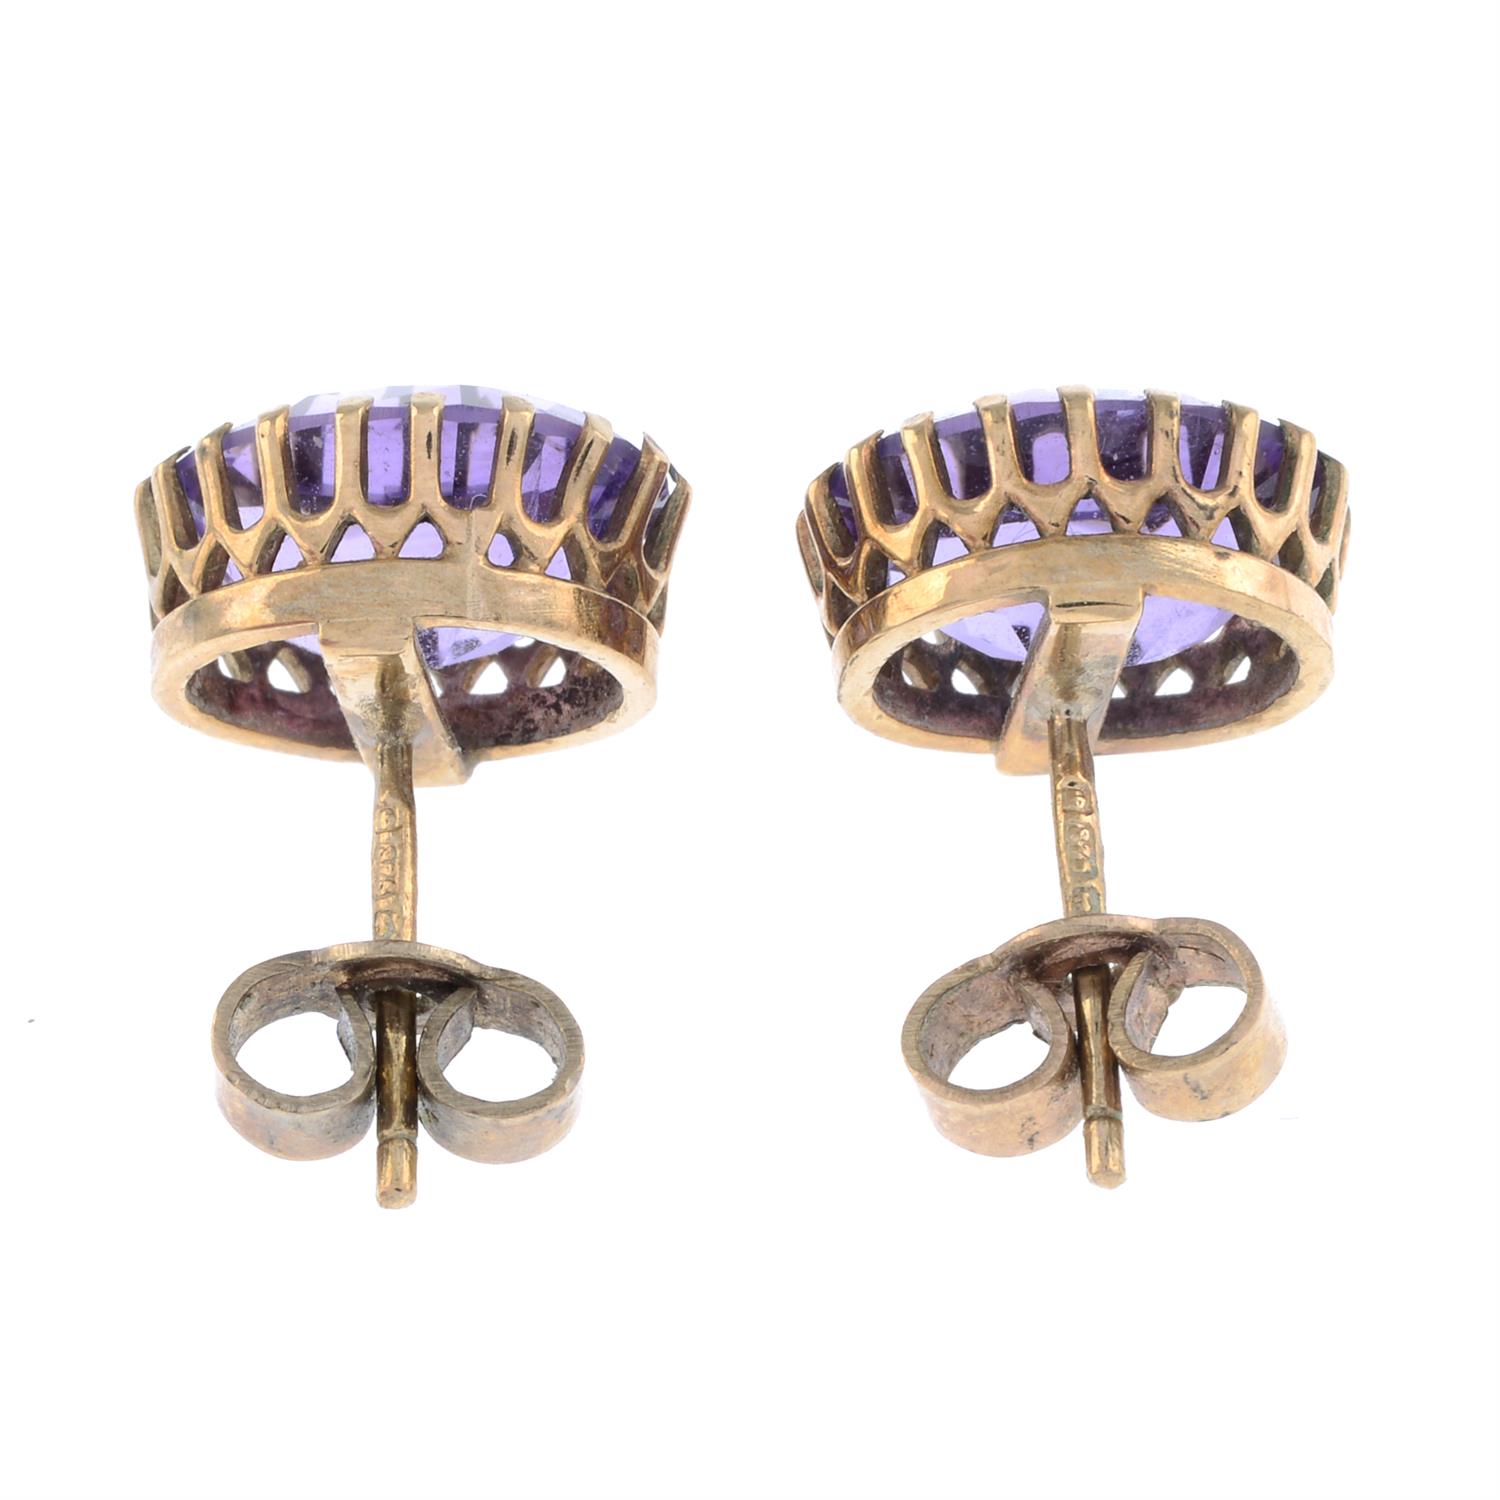 9ct gold amethyst stud earrings - Image 2 of 2